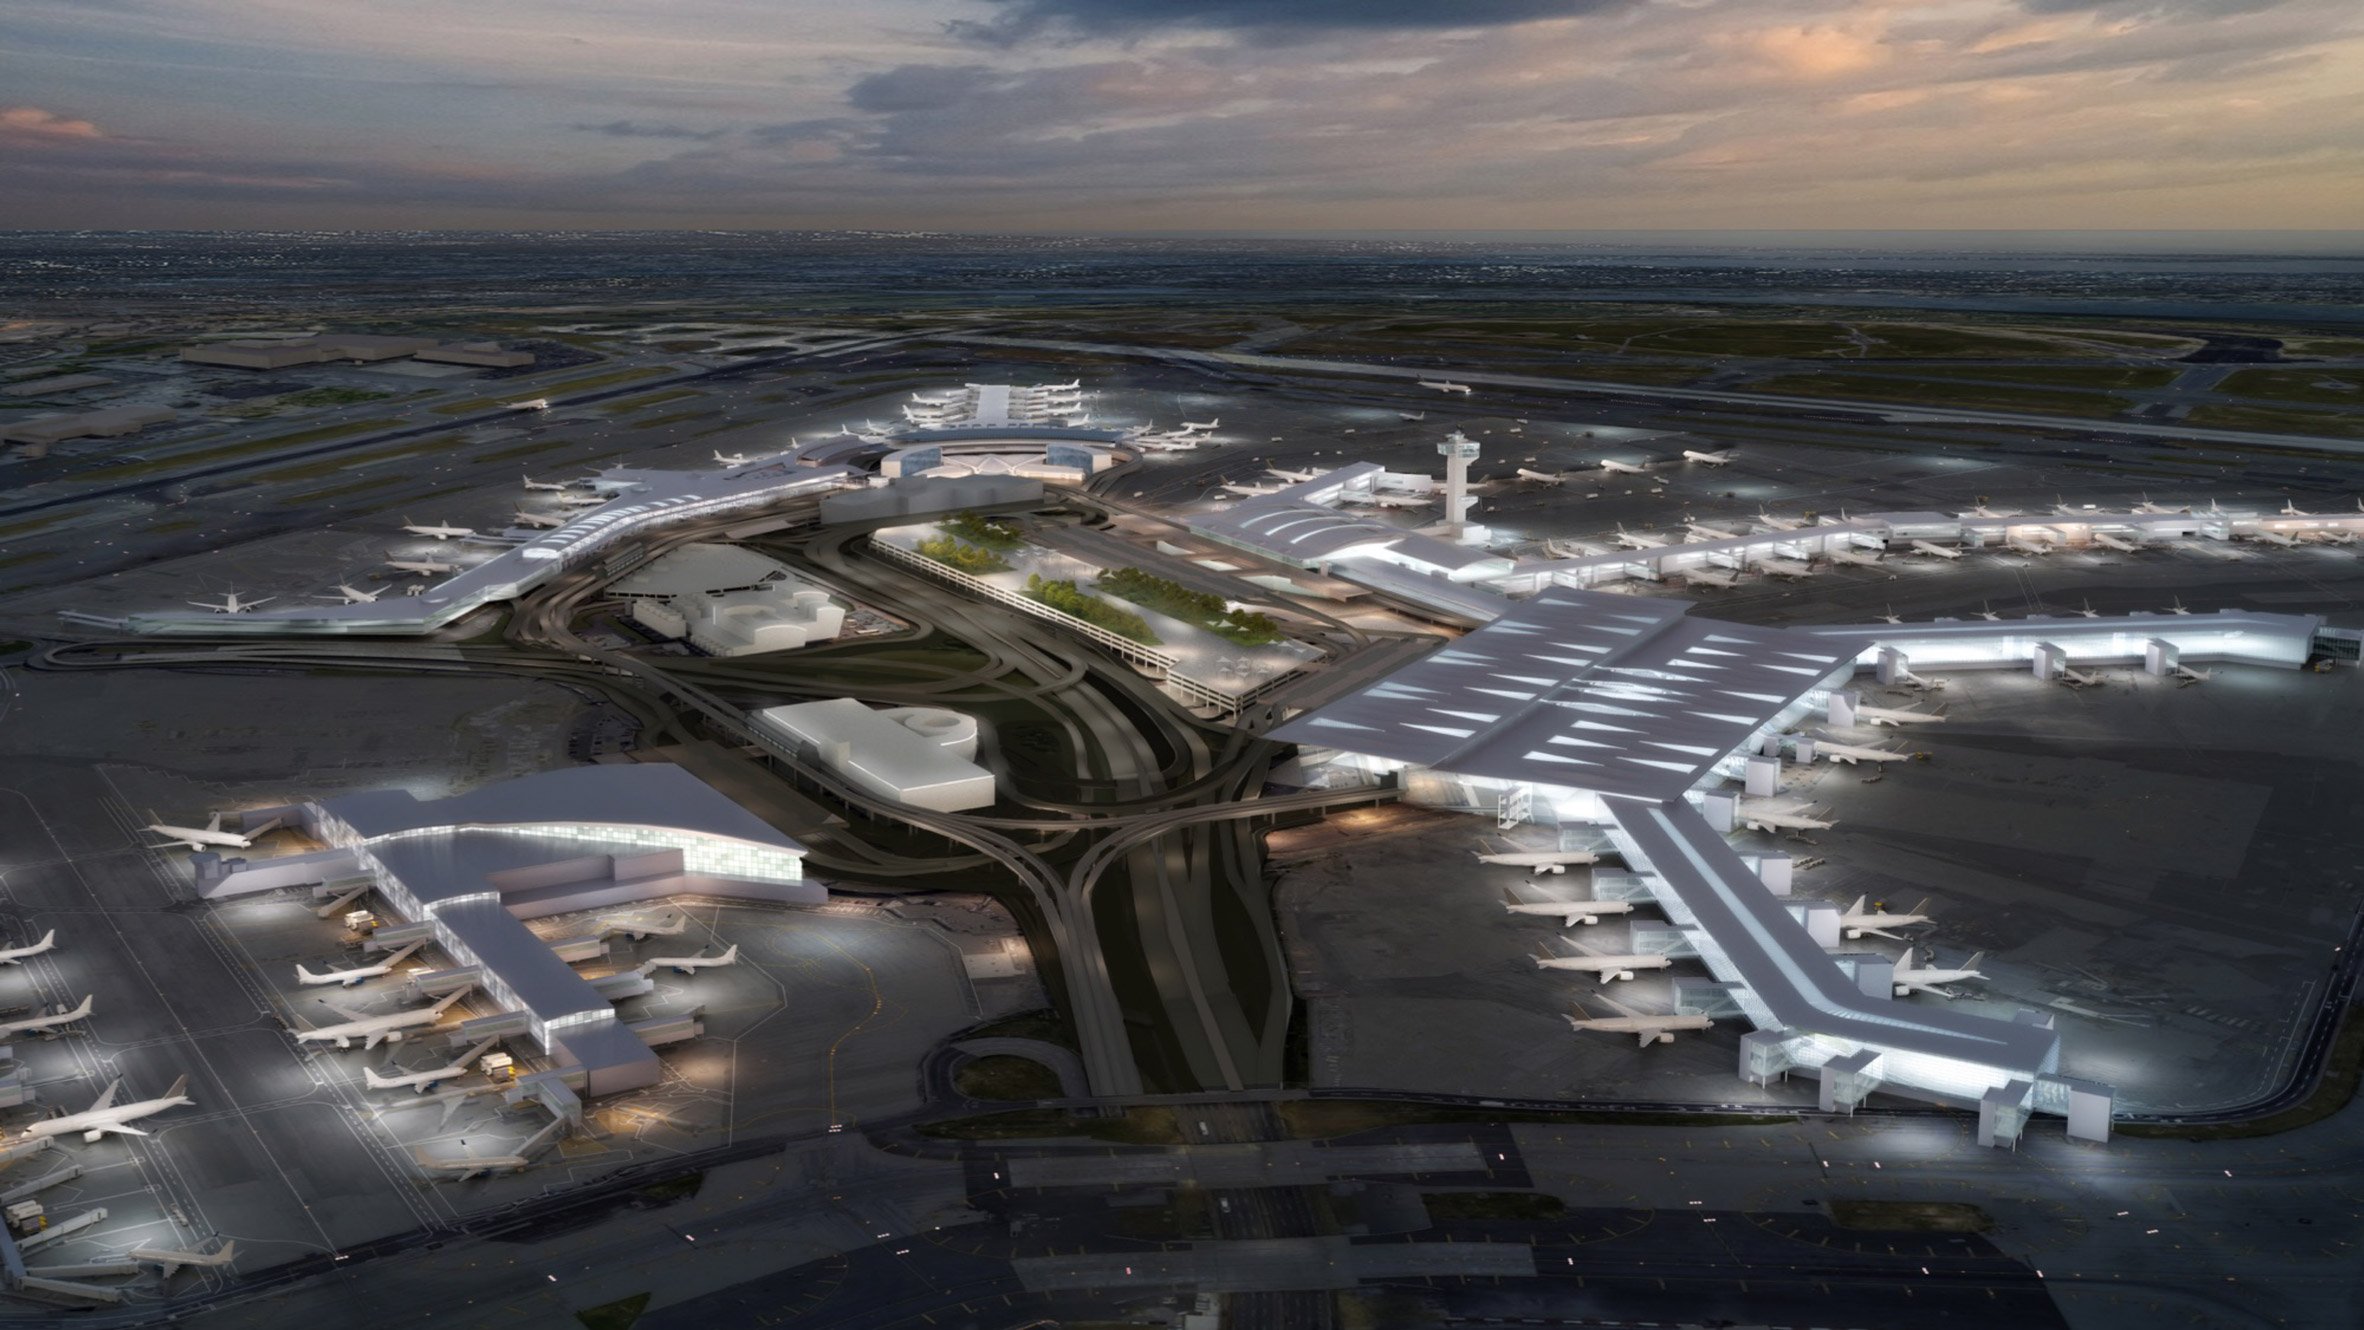 Plans to overhaul New York's JFK airport updated